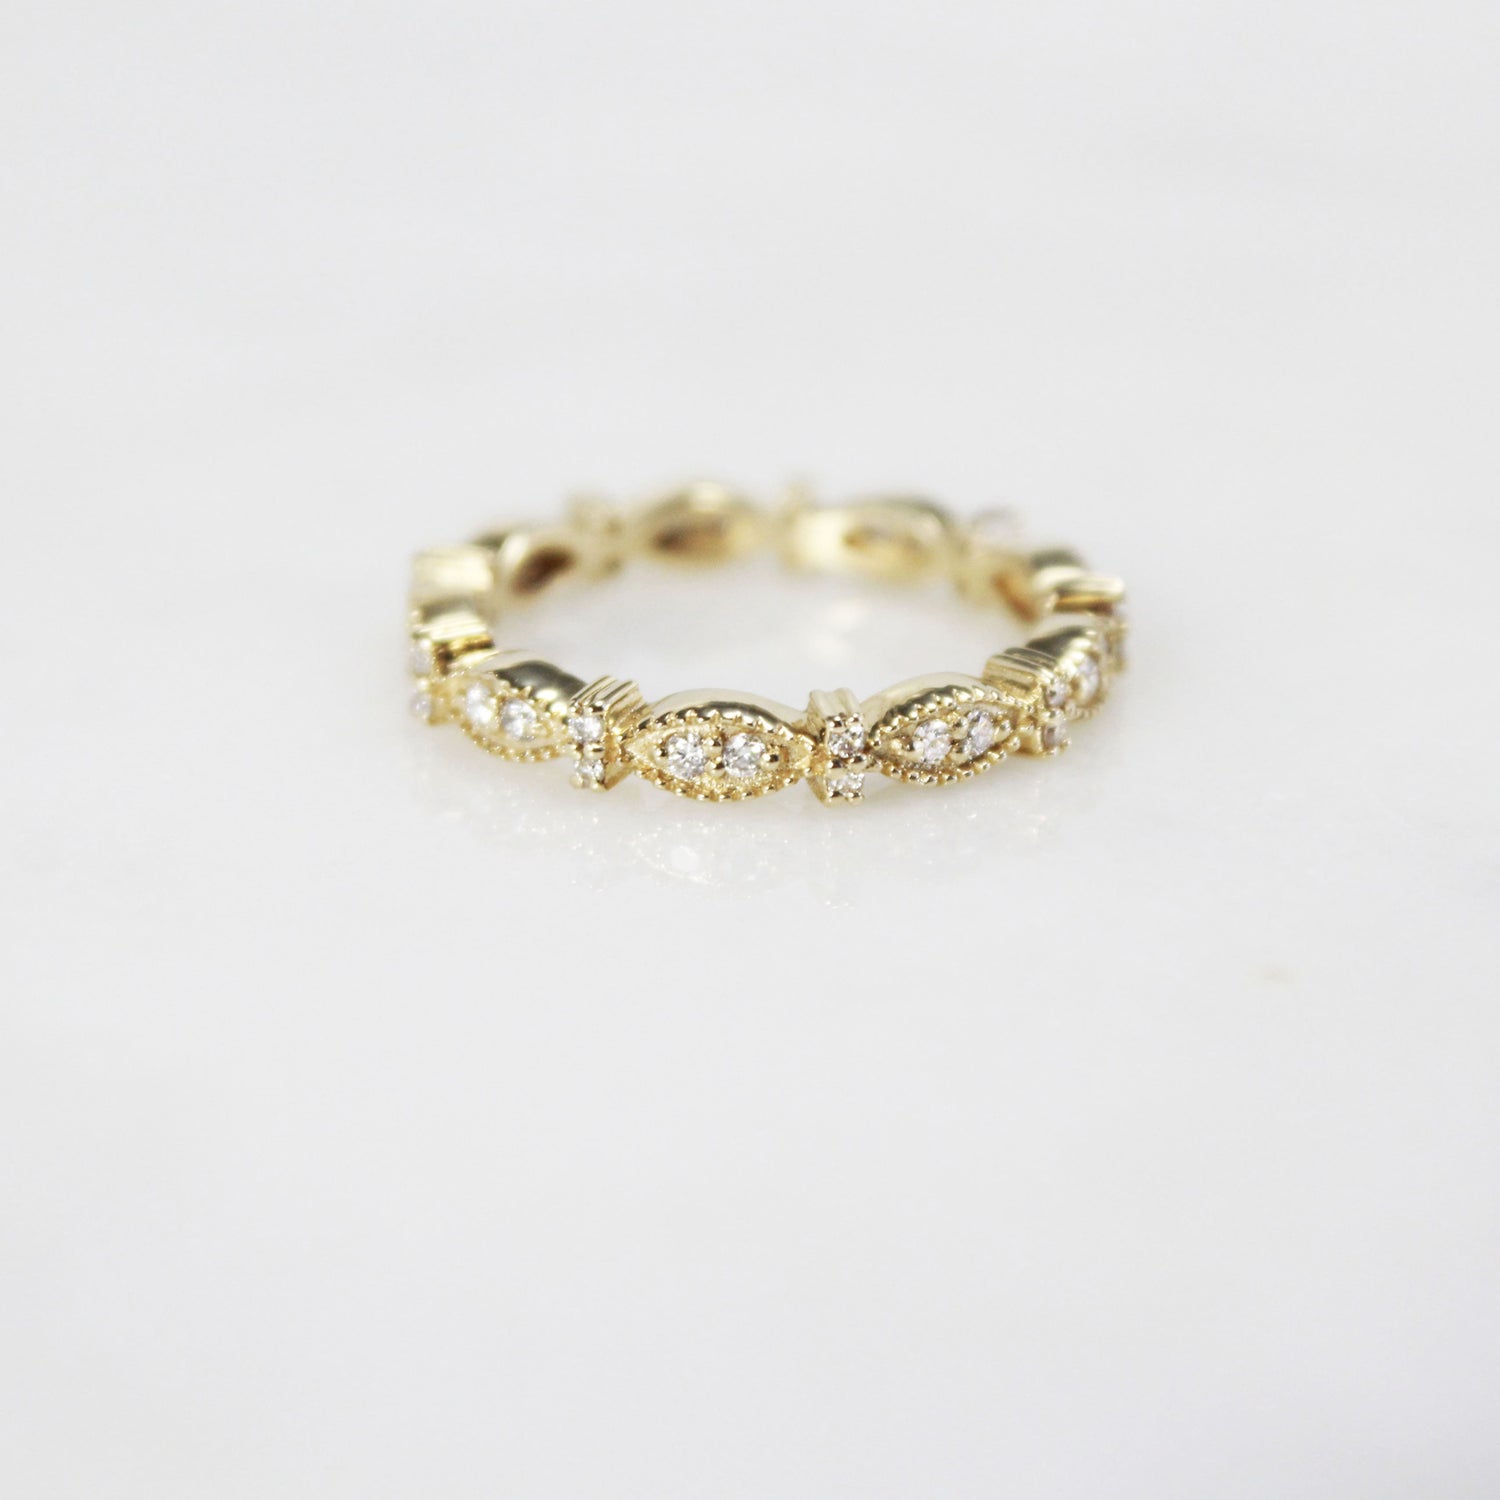 Rhiannon Diamond Ring